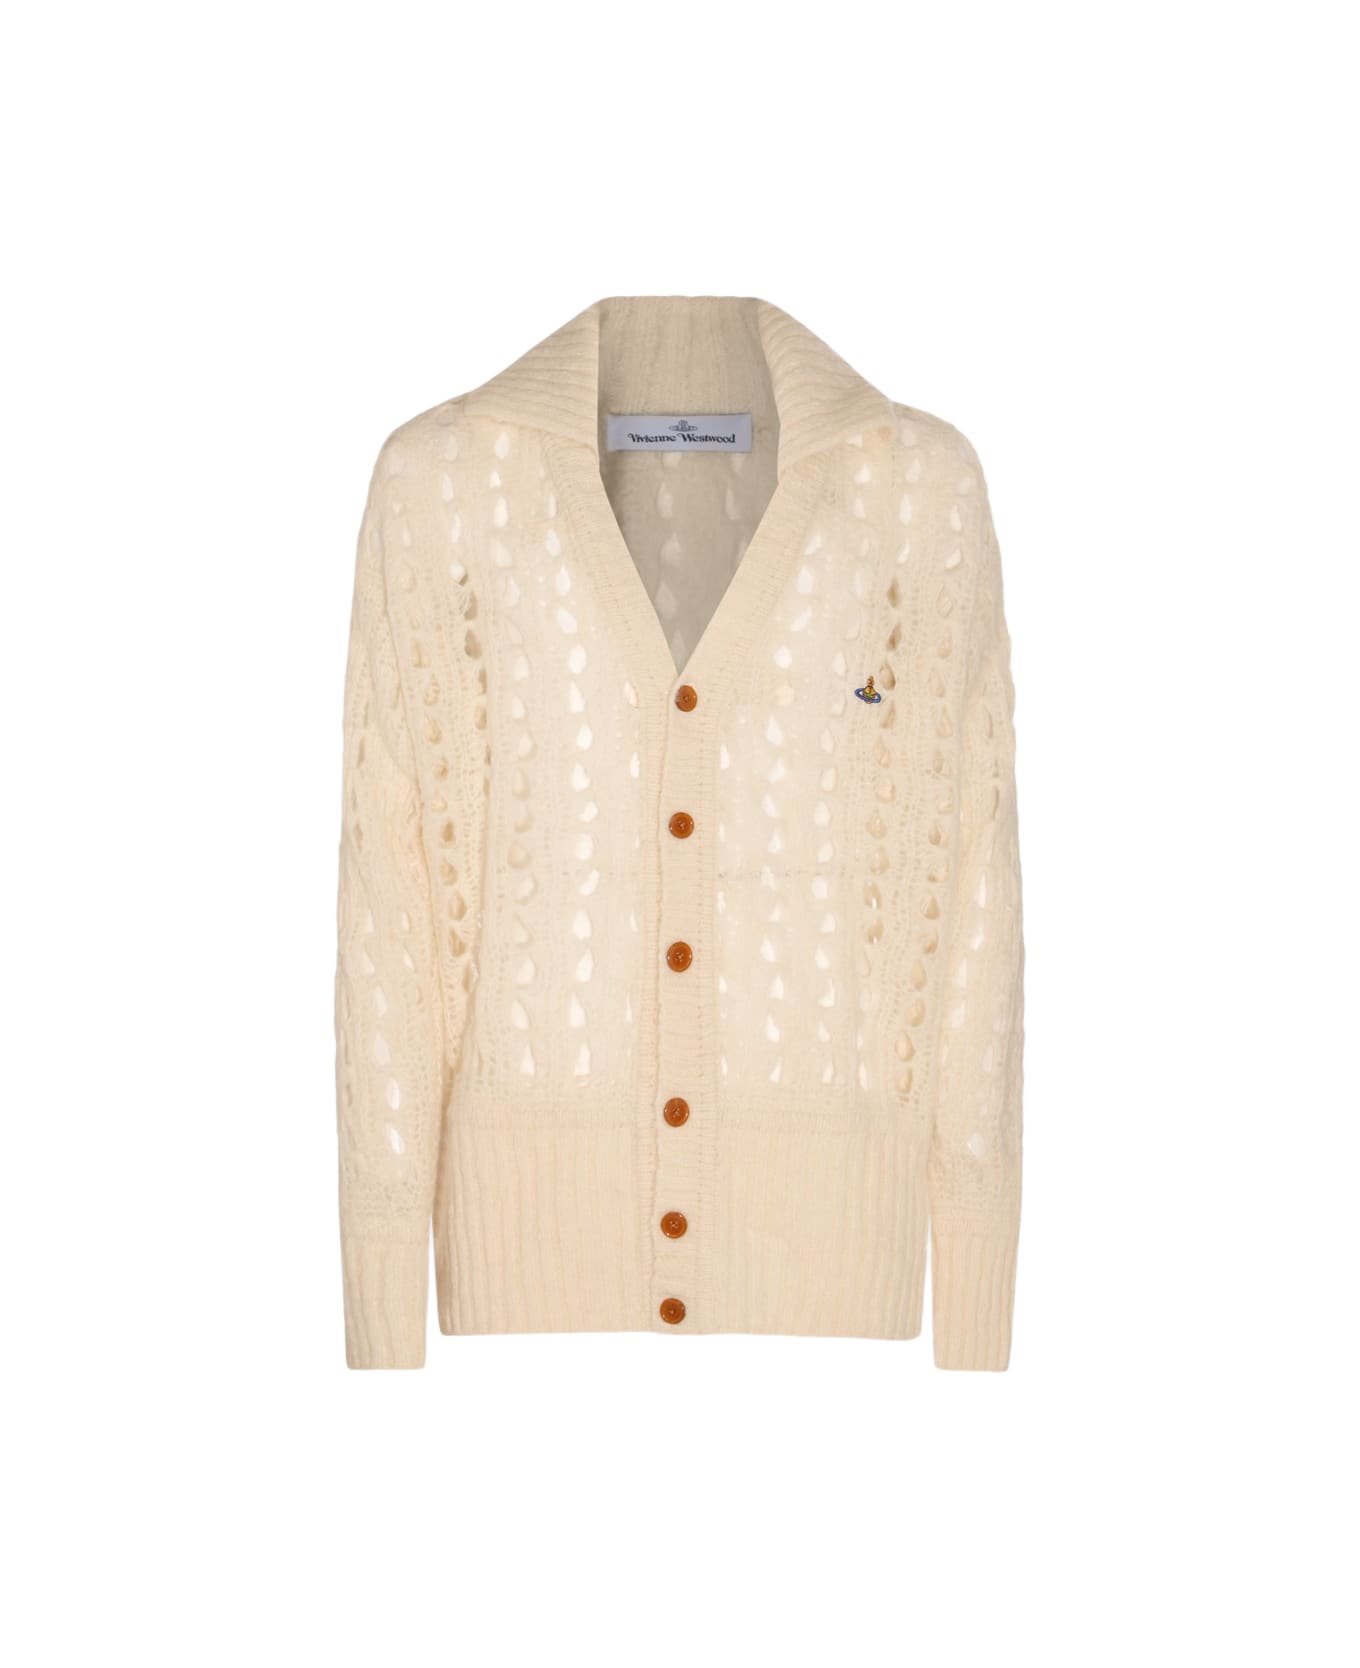 Vivienne Westwood White Wool Knitwear - White カーディガン